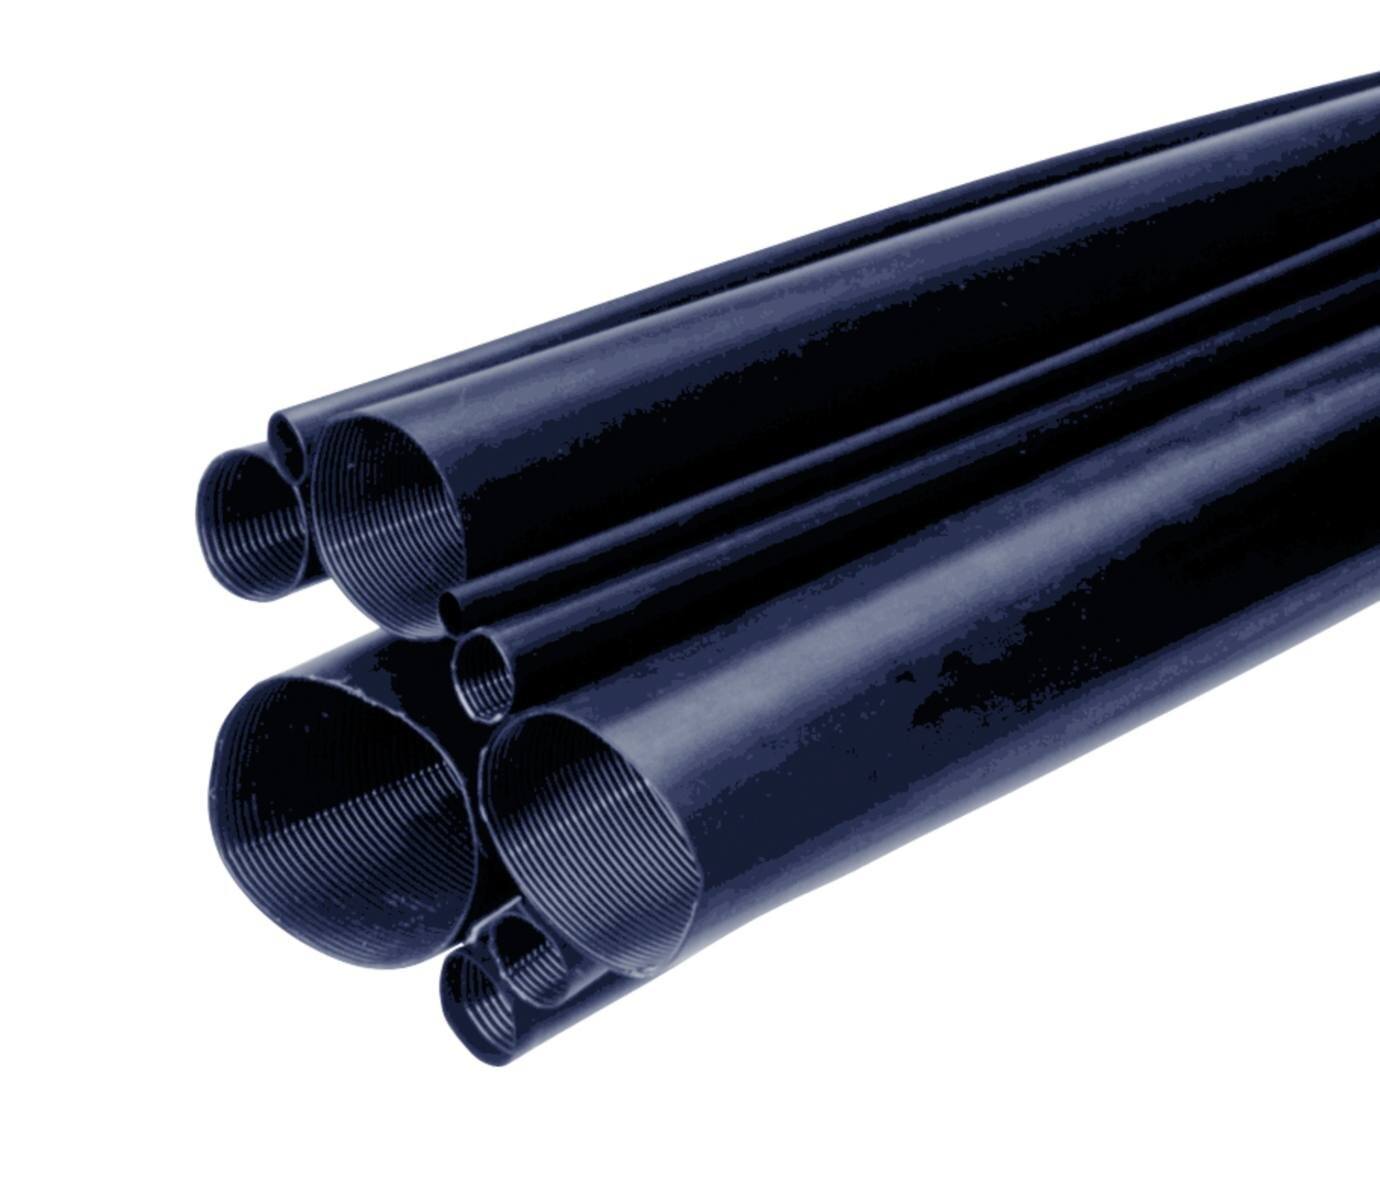 3M MDT-A Medium-wall heat-shrink tubing with adhesive, black, 19/6 mm, 1 m